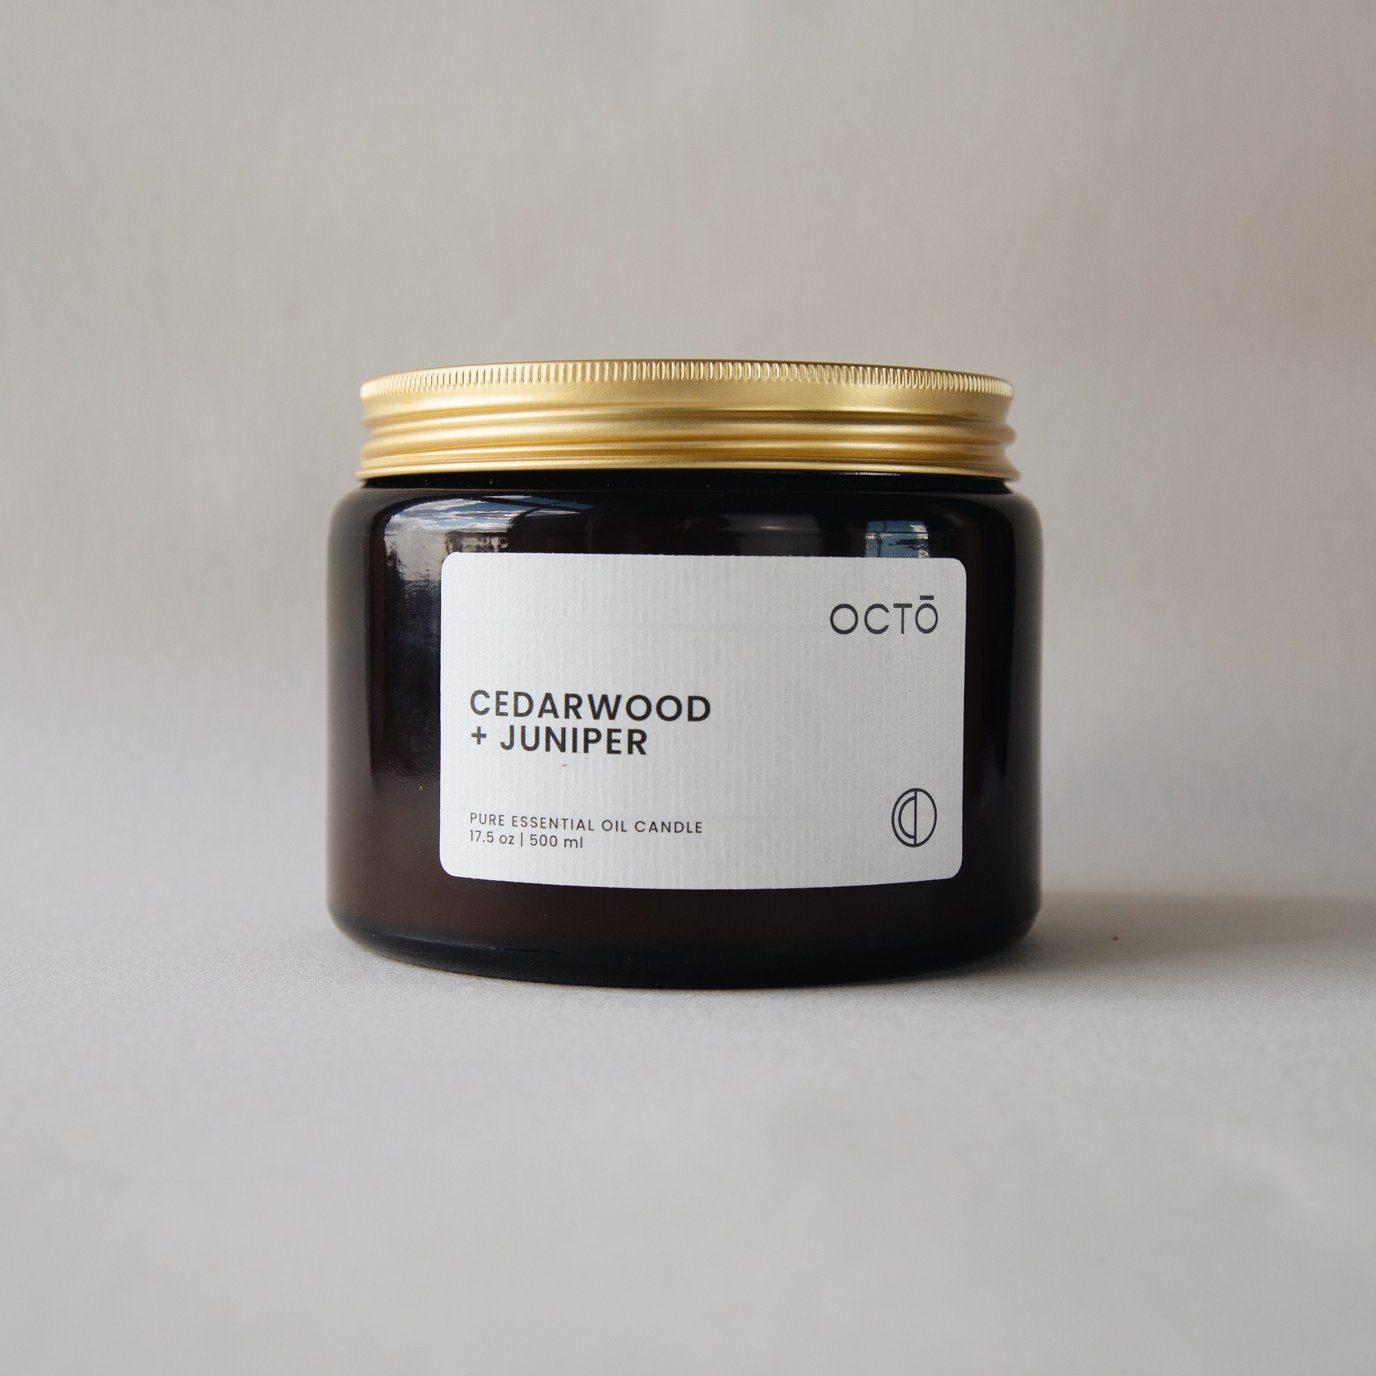 Cedarwood & Juniper Berry Candle Kerzen Octo & Co. Medium 250ml - Amber Jar - Genuine Selection